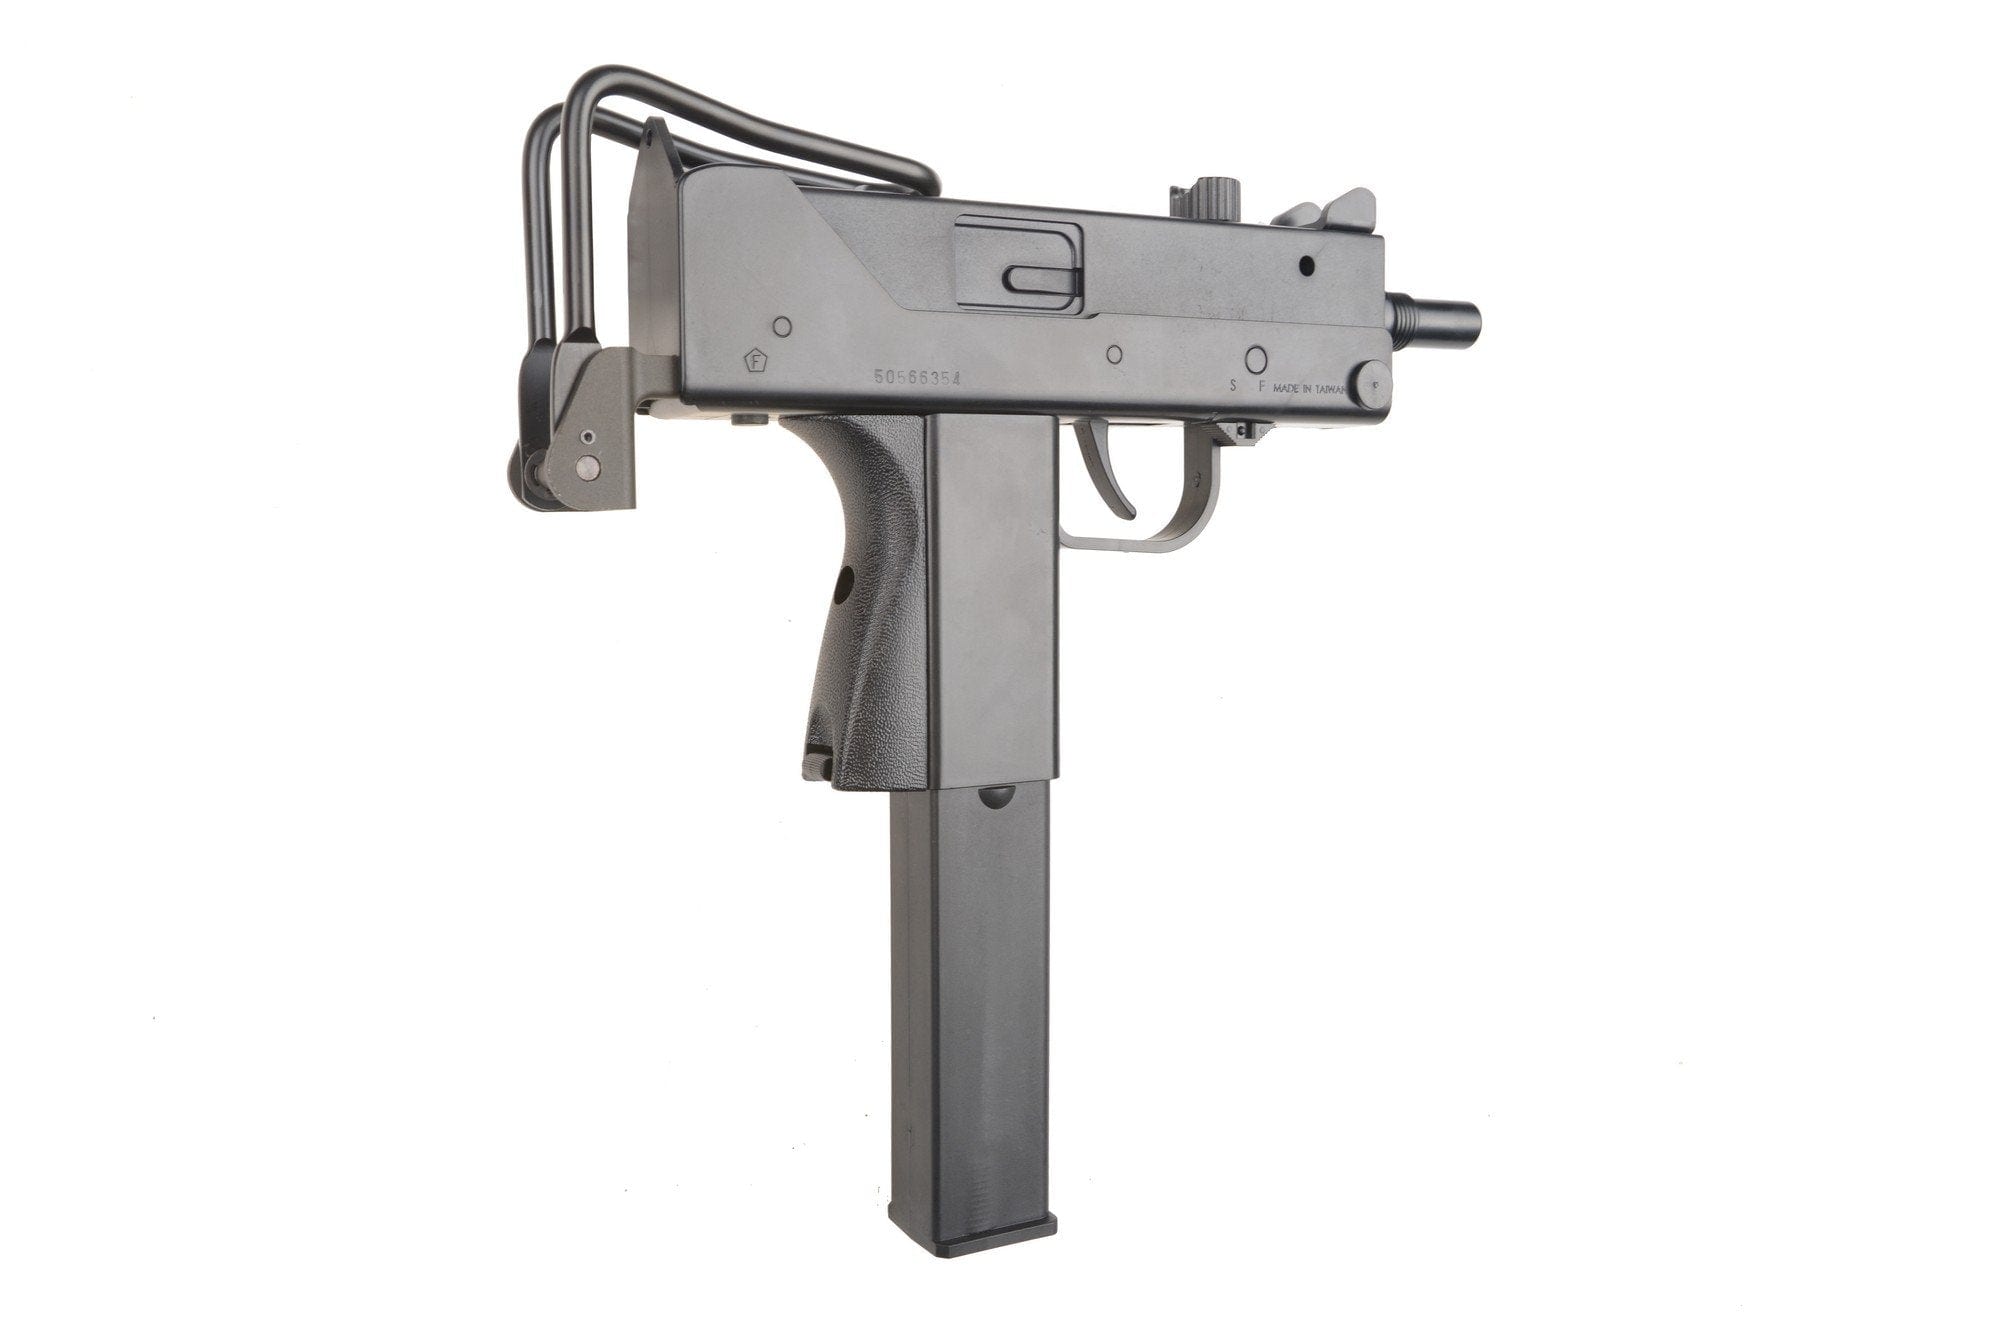 M11 Submachine Gun